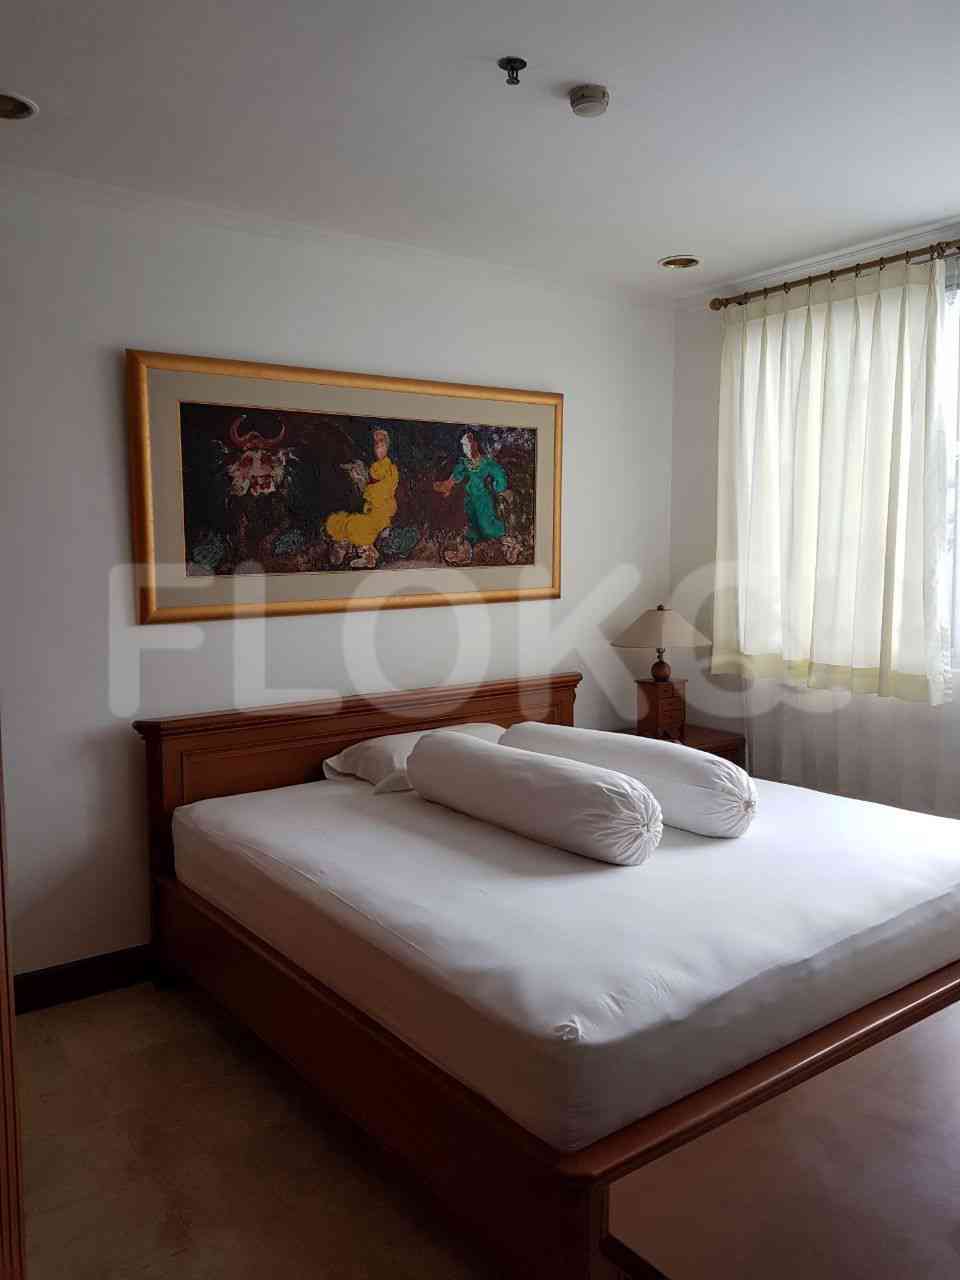 4 Bedroom on 2nd Floor for Rent in Bumi Mas Apartment - ffae62 4